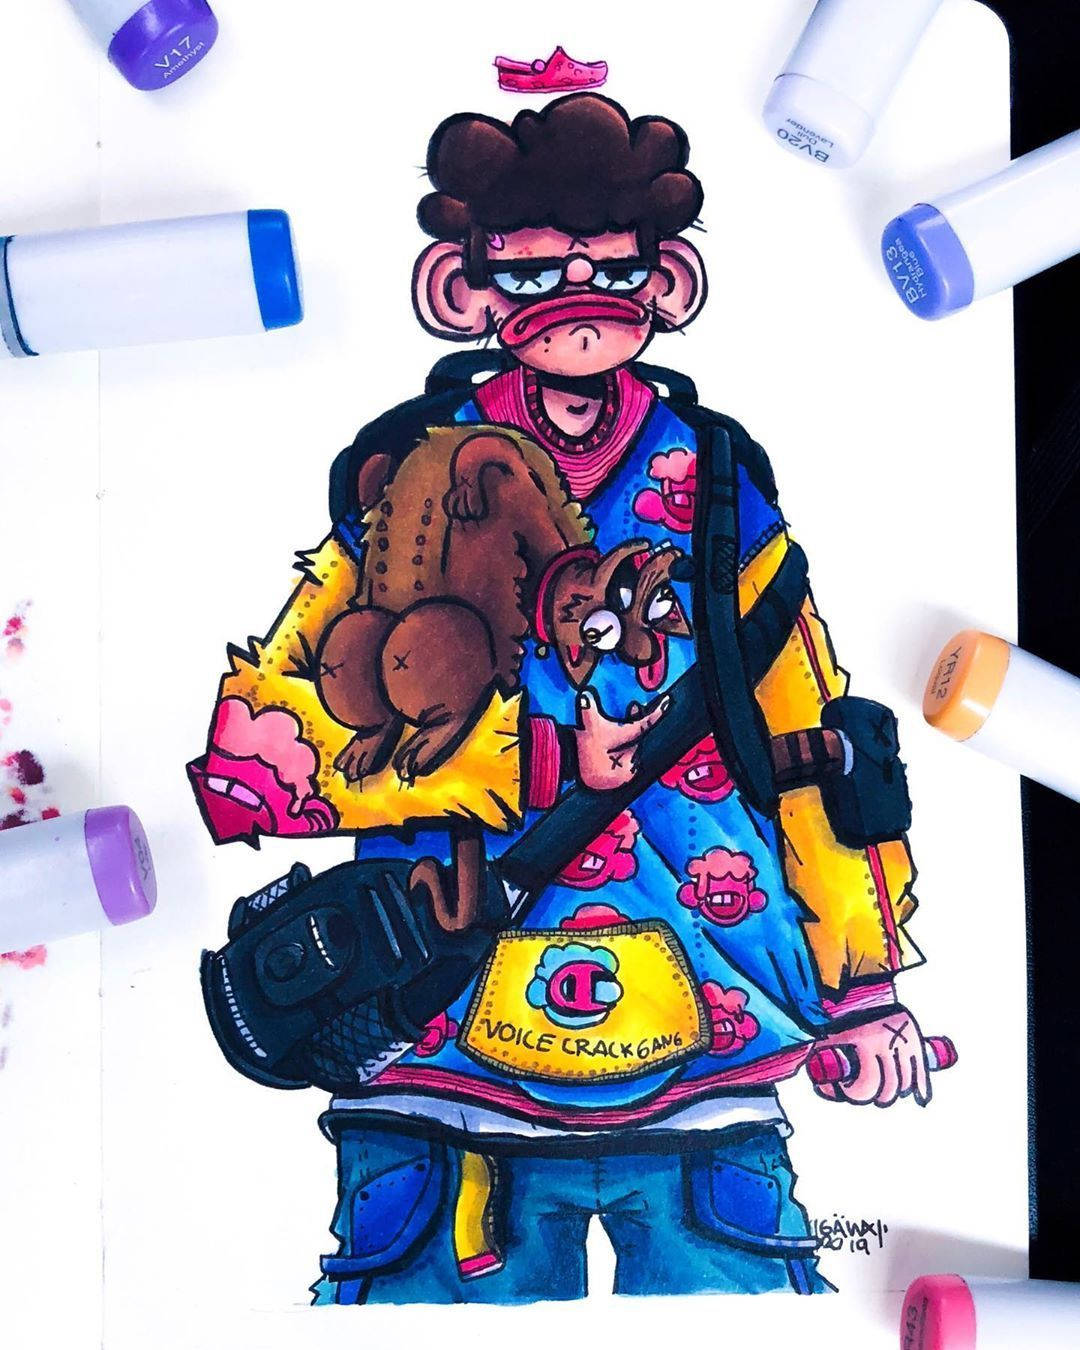 Gawx Art Man With Dog Background